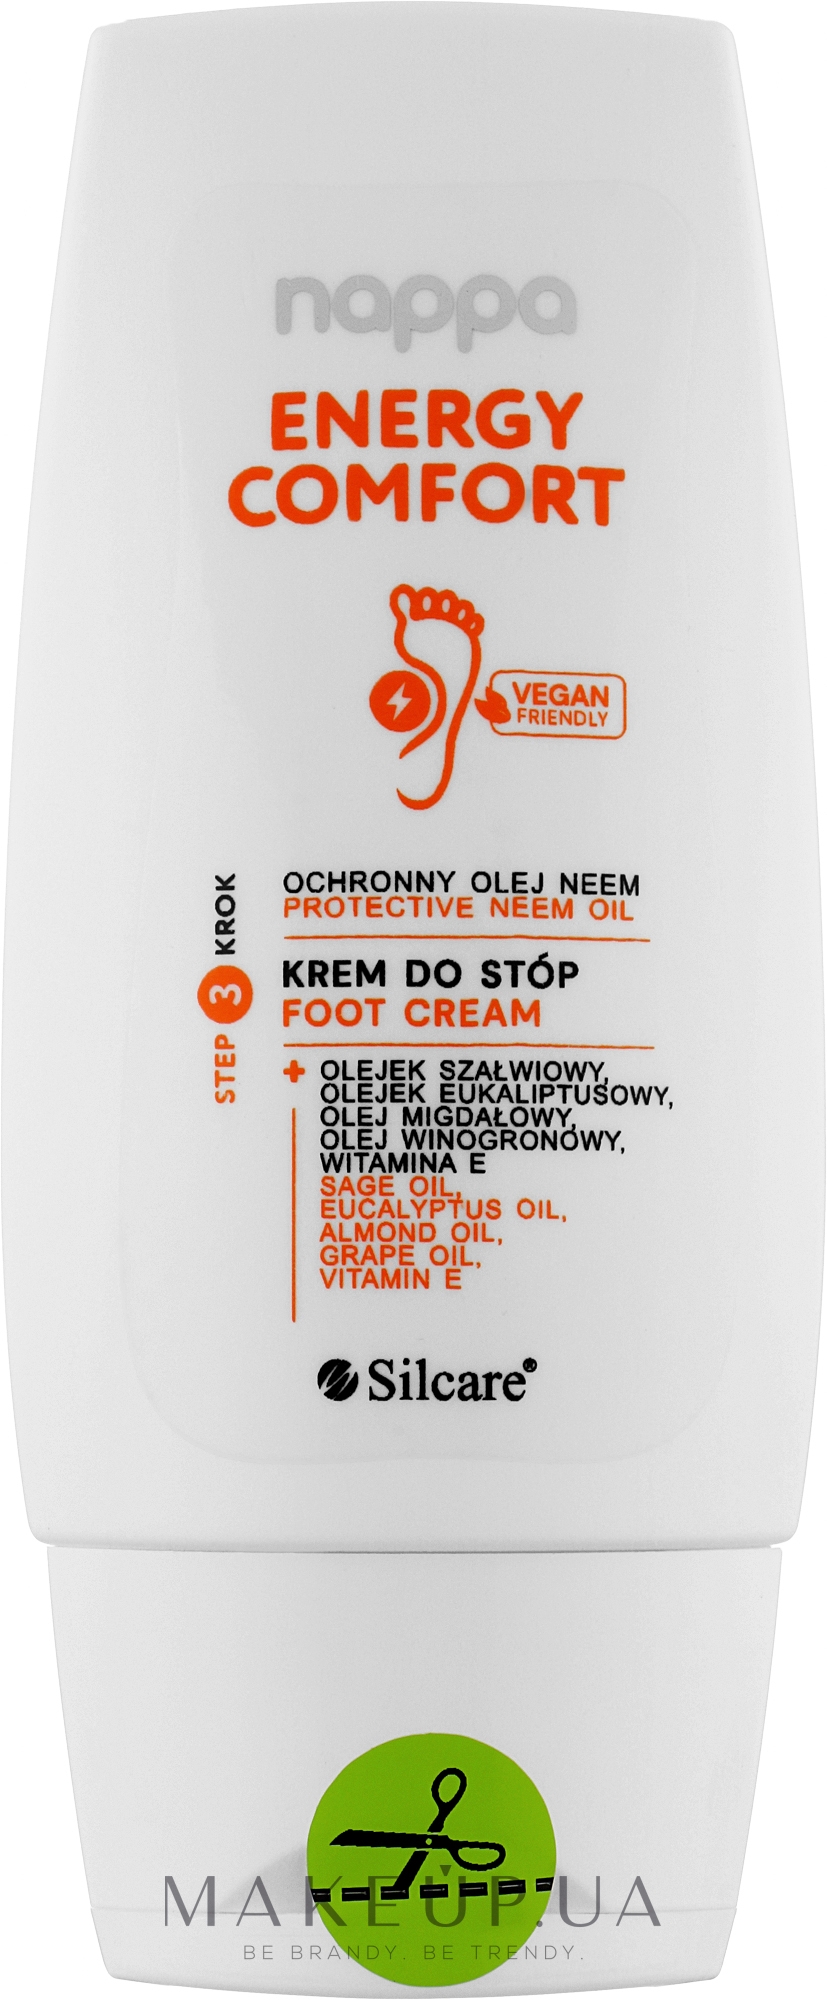 Крем для ног - Silcare Nappa Foot Cream Neem Oil & Sage Oil — фото 100ml